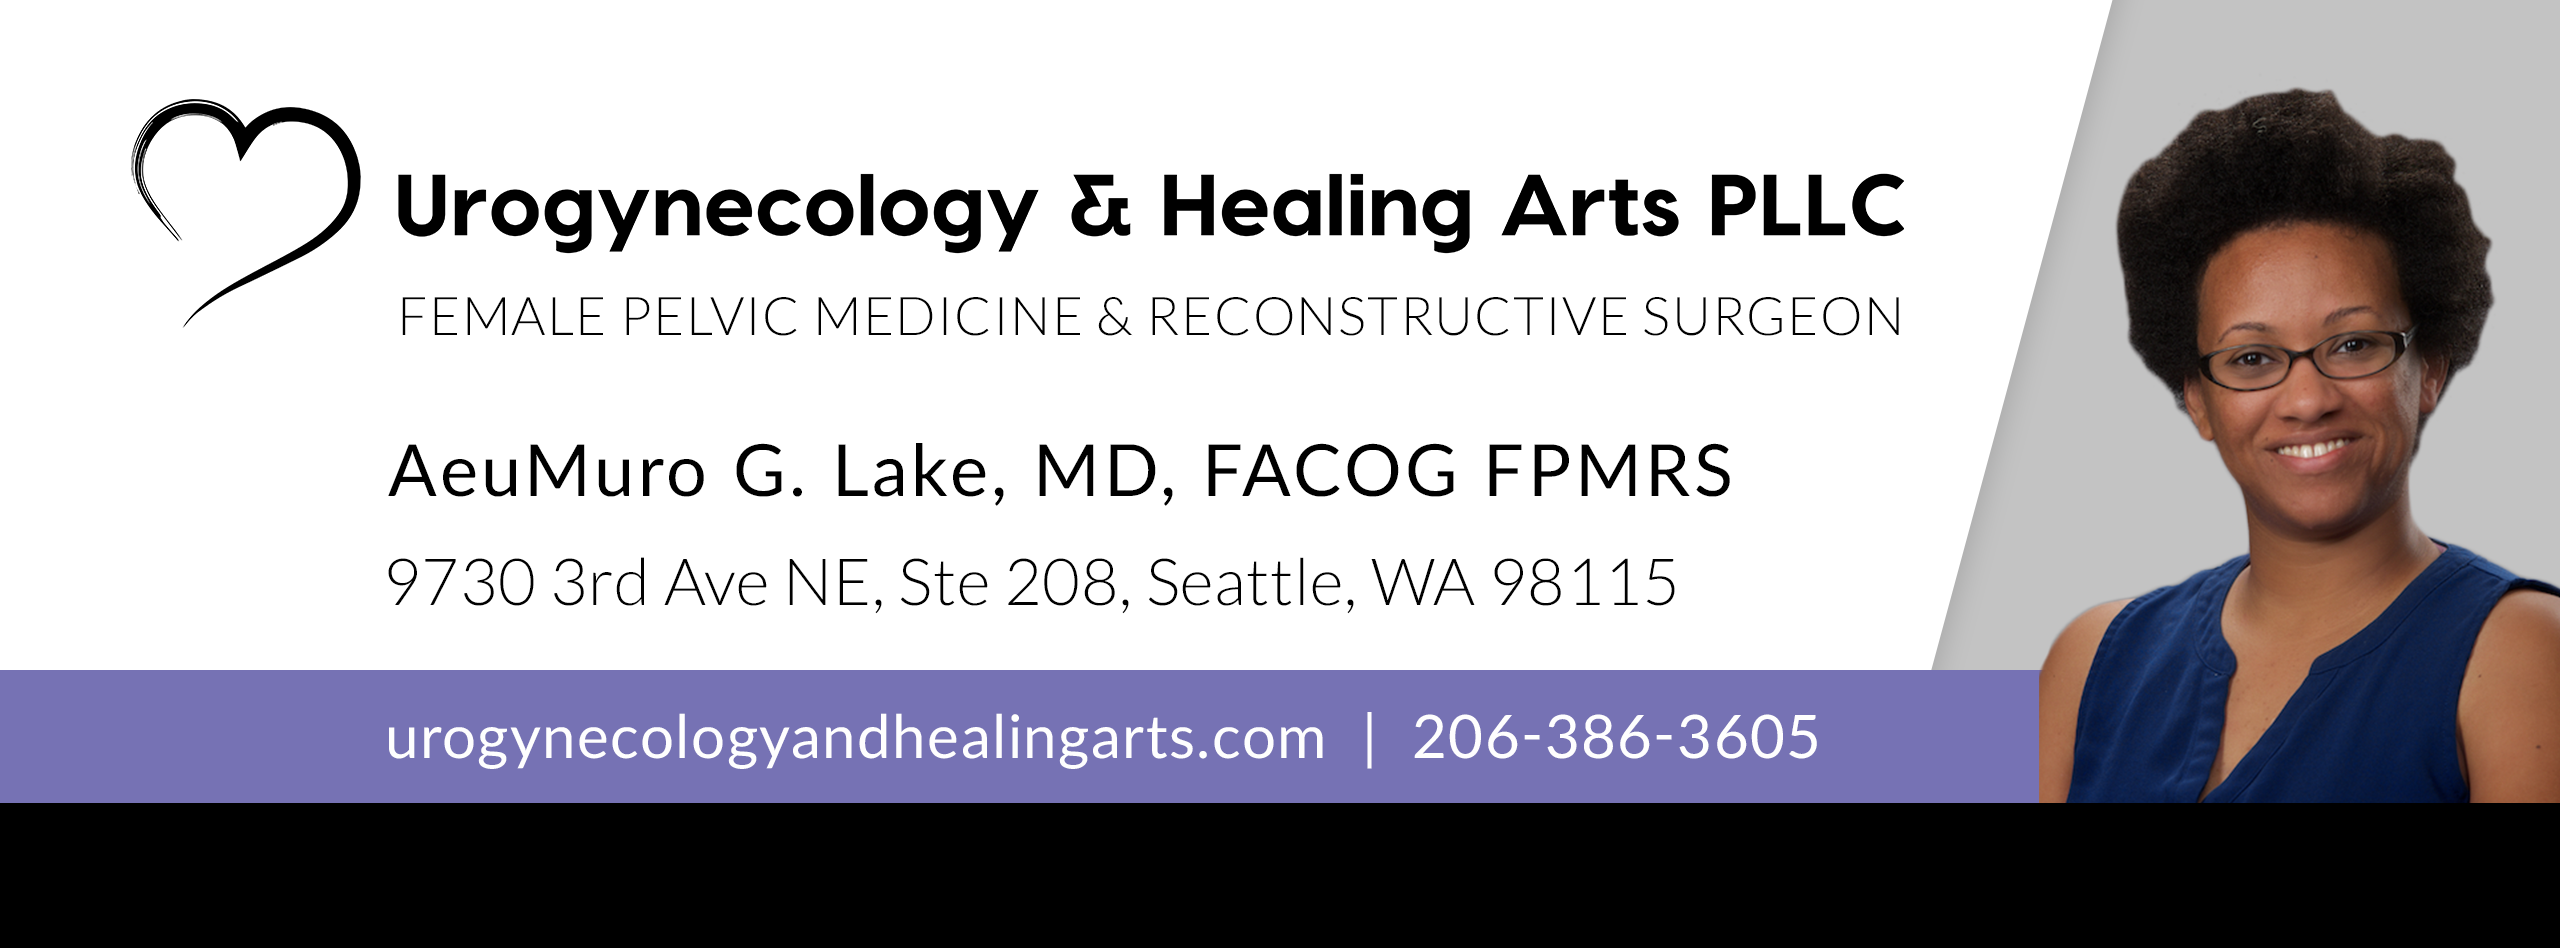 Urogynecology & Healing Arts